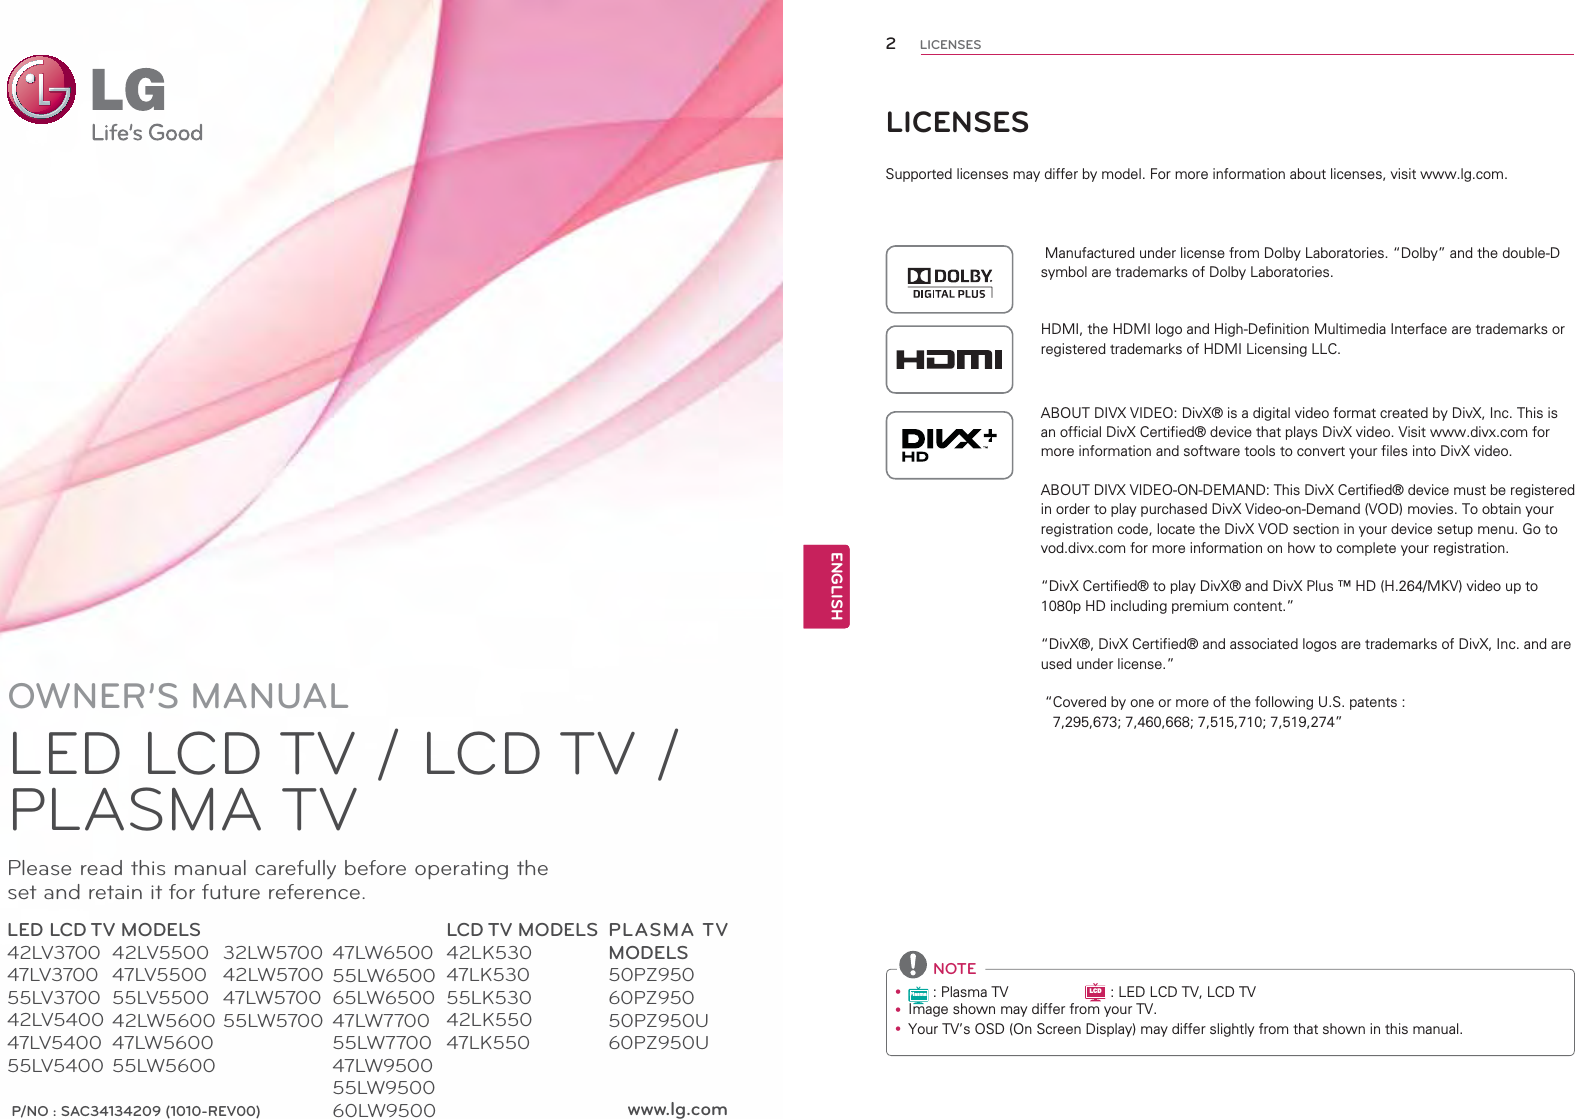 www.lg.comP/NO : SAC34134209 (1010-REV00)OWNER’S MANUALLED LCD TV / LCD TV / PLASMA TVPlease read this manual carefully before operating the set and retain it for future reference.LED LCD TV MODELS42LV370047LV370055LV370042LV540047LV540055LV5400LCD TV MODELS42LK53047LK53055LK53042LK55047LK550PLASMA TV MODELS50PZ95060PZ95050PZ950U60PZ950U42LV550047LV550055LV550042LW560047LW560055LW560032LW570042LW570047LW570055LW570047LW650055LW650065LW650047LW770055LW770047LW950055LW950060LW9500LICENSES6XSSRUWHGOLFHQVHVPD\GLIIHUE\PRGHO)RUPRUHLQIRUPDWLRQDERXWOLFHQVHVYLVLWZZZOJFRP0DQXIDFWXUHGXQGHUOLFHQVHIURP&apos;ROE\/DERUDWRULHV|&apos;ROE\}DQGWKHGRXEOH&apos;V\PERODUHWUDGHPDUNVRI&apos;ROE\/DERUDWRULHV+&apos;0,WKH+&apos;0,ORJRDQG+LJK&apos;HILQLWLRQ0XOWLPHGLD,QWHUIDFHDUHWUDGHPDUNVRUUHJLVWHUHGWUDGHPDUNVRI+&apos;0,/LFHQVLQJ//&amp;$%287&apos;,9;9,&apos;(2&apos;LY;ÌLVDGLJLWDOYLGHRIRUPDWFUHDWHGE\&apos;LY;,QF7KLVLVDQRIILFLDO&apos;LY;&amp;HUWLILHGÌGHYLFHWKDWSOD\V&apos;LY;YLGHR9LVLWZZZGLY[FRPIRUPRUHLQIRUPDWLRQDQGVRIWZDUHWRROVWRFRQYHUW\RXUILOHVLQWR&apos;LY;YLGHR$%287&apos;,9;9,&apos;(221&apos;(0$1&apos;7KLV&apos;LY;&amp;HUWLILHGÌGHYLFHPXVWEHUHJLVWHUHGLQRUGHUWRSOD\SXUFKDVHG&apos;LY;9LGHRRQ&apos;HPDQG92&apos;PRYLHV7RREWDLQ\RXUUHJLVWUDWLRQFRGHORFDWHWKH&apos;LY;92&apos;VHFWLRQLQ\RXUGHYLFHVHWXSPHQX*RWRYRGGLY[FRPIRUPRUHLQIRUPDWLRQRQKRZWRFRPSOHWH\RXUUHJLVWUDWLRQ|&apos;LY;&amp;HUWLILHGÌWRSOD\&apos;LY;ÌDQG&apos;LY;3OXVÎ+&apos;+0.9YLGHRXSWRS+&apos;LQFOXGLQJSUHPLXPFRQWHQW}|&apos;LY;Ì&apos;LY;&amp;HUWLILHGÌDQGDVVRFLDWHGORJRVDUHWUDGHPDUNVRI&apos;LY;,QFDQGDUHXVHGXQGHUOLFHQVH}|&amp;RYHUHGE\RQHRUPRUHRIWKHIROORZLQJ86SDWHQWV} NOTEyPlasma3ODVPD79LCD/(&apos;/&amp;&apos;79/&amp;&apos;79y ,PDJHVKRZQPD\GLIIHUIURP\RXU79y &lt;RXU79V26&apos;2Q6FUHHQ&apos;LVSOD\PD\GLIIHUVOLJKWO\IURPWKDWVKRZQLQWKLVPDQXDO2ENGENGLISHLICENSES